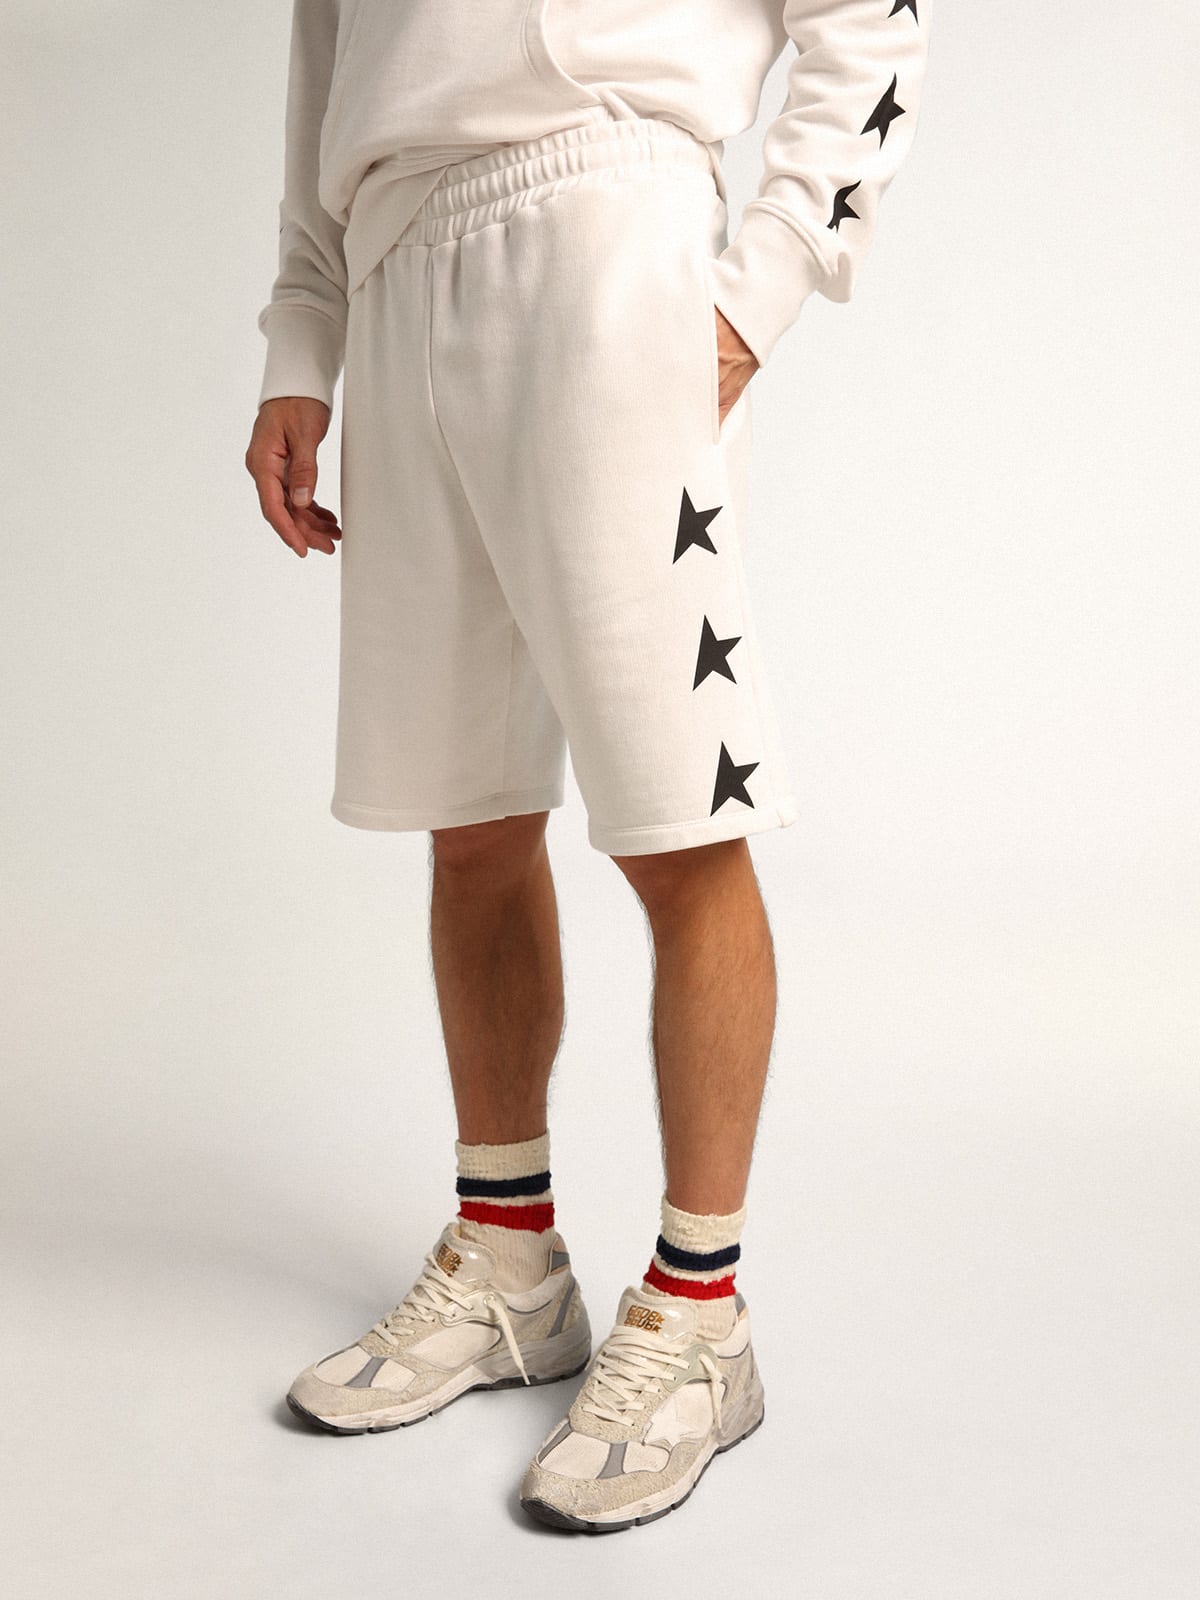 Golden Goose - Men's vintage white bermuda shorts with contrasting black stars in 